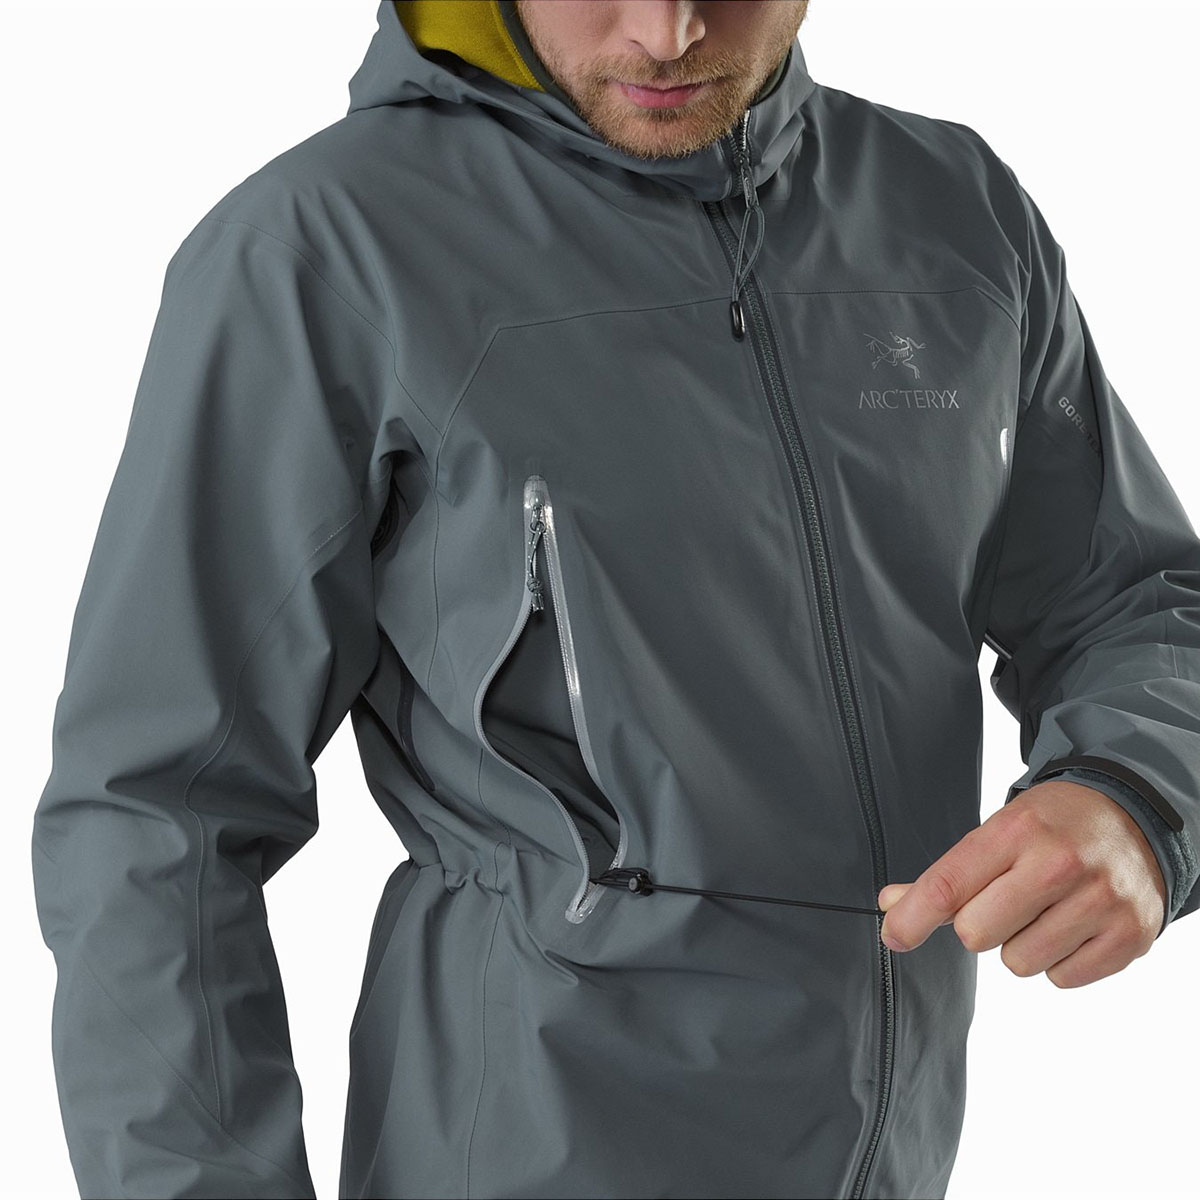 Zeta AR Jacket, men's, discontinued Spring 2019 colors